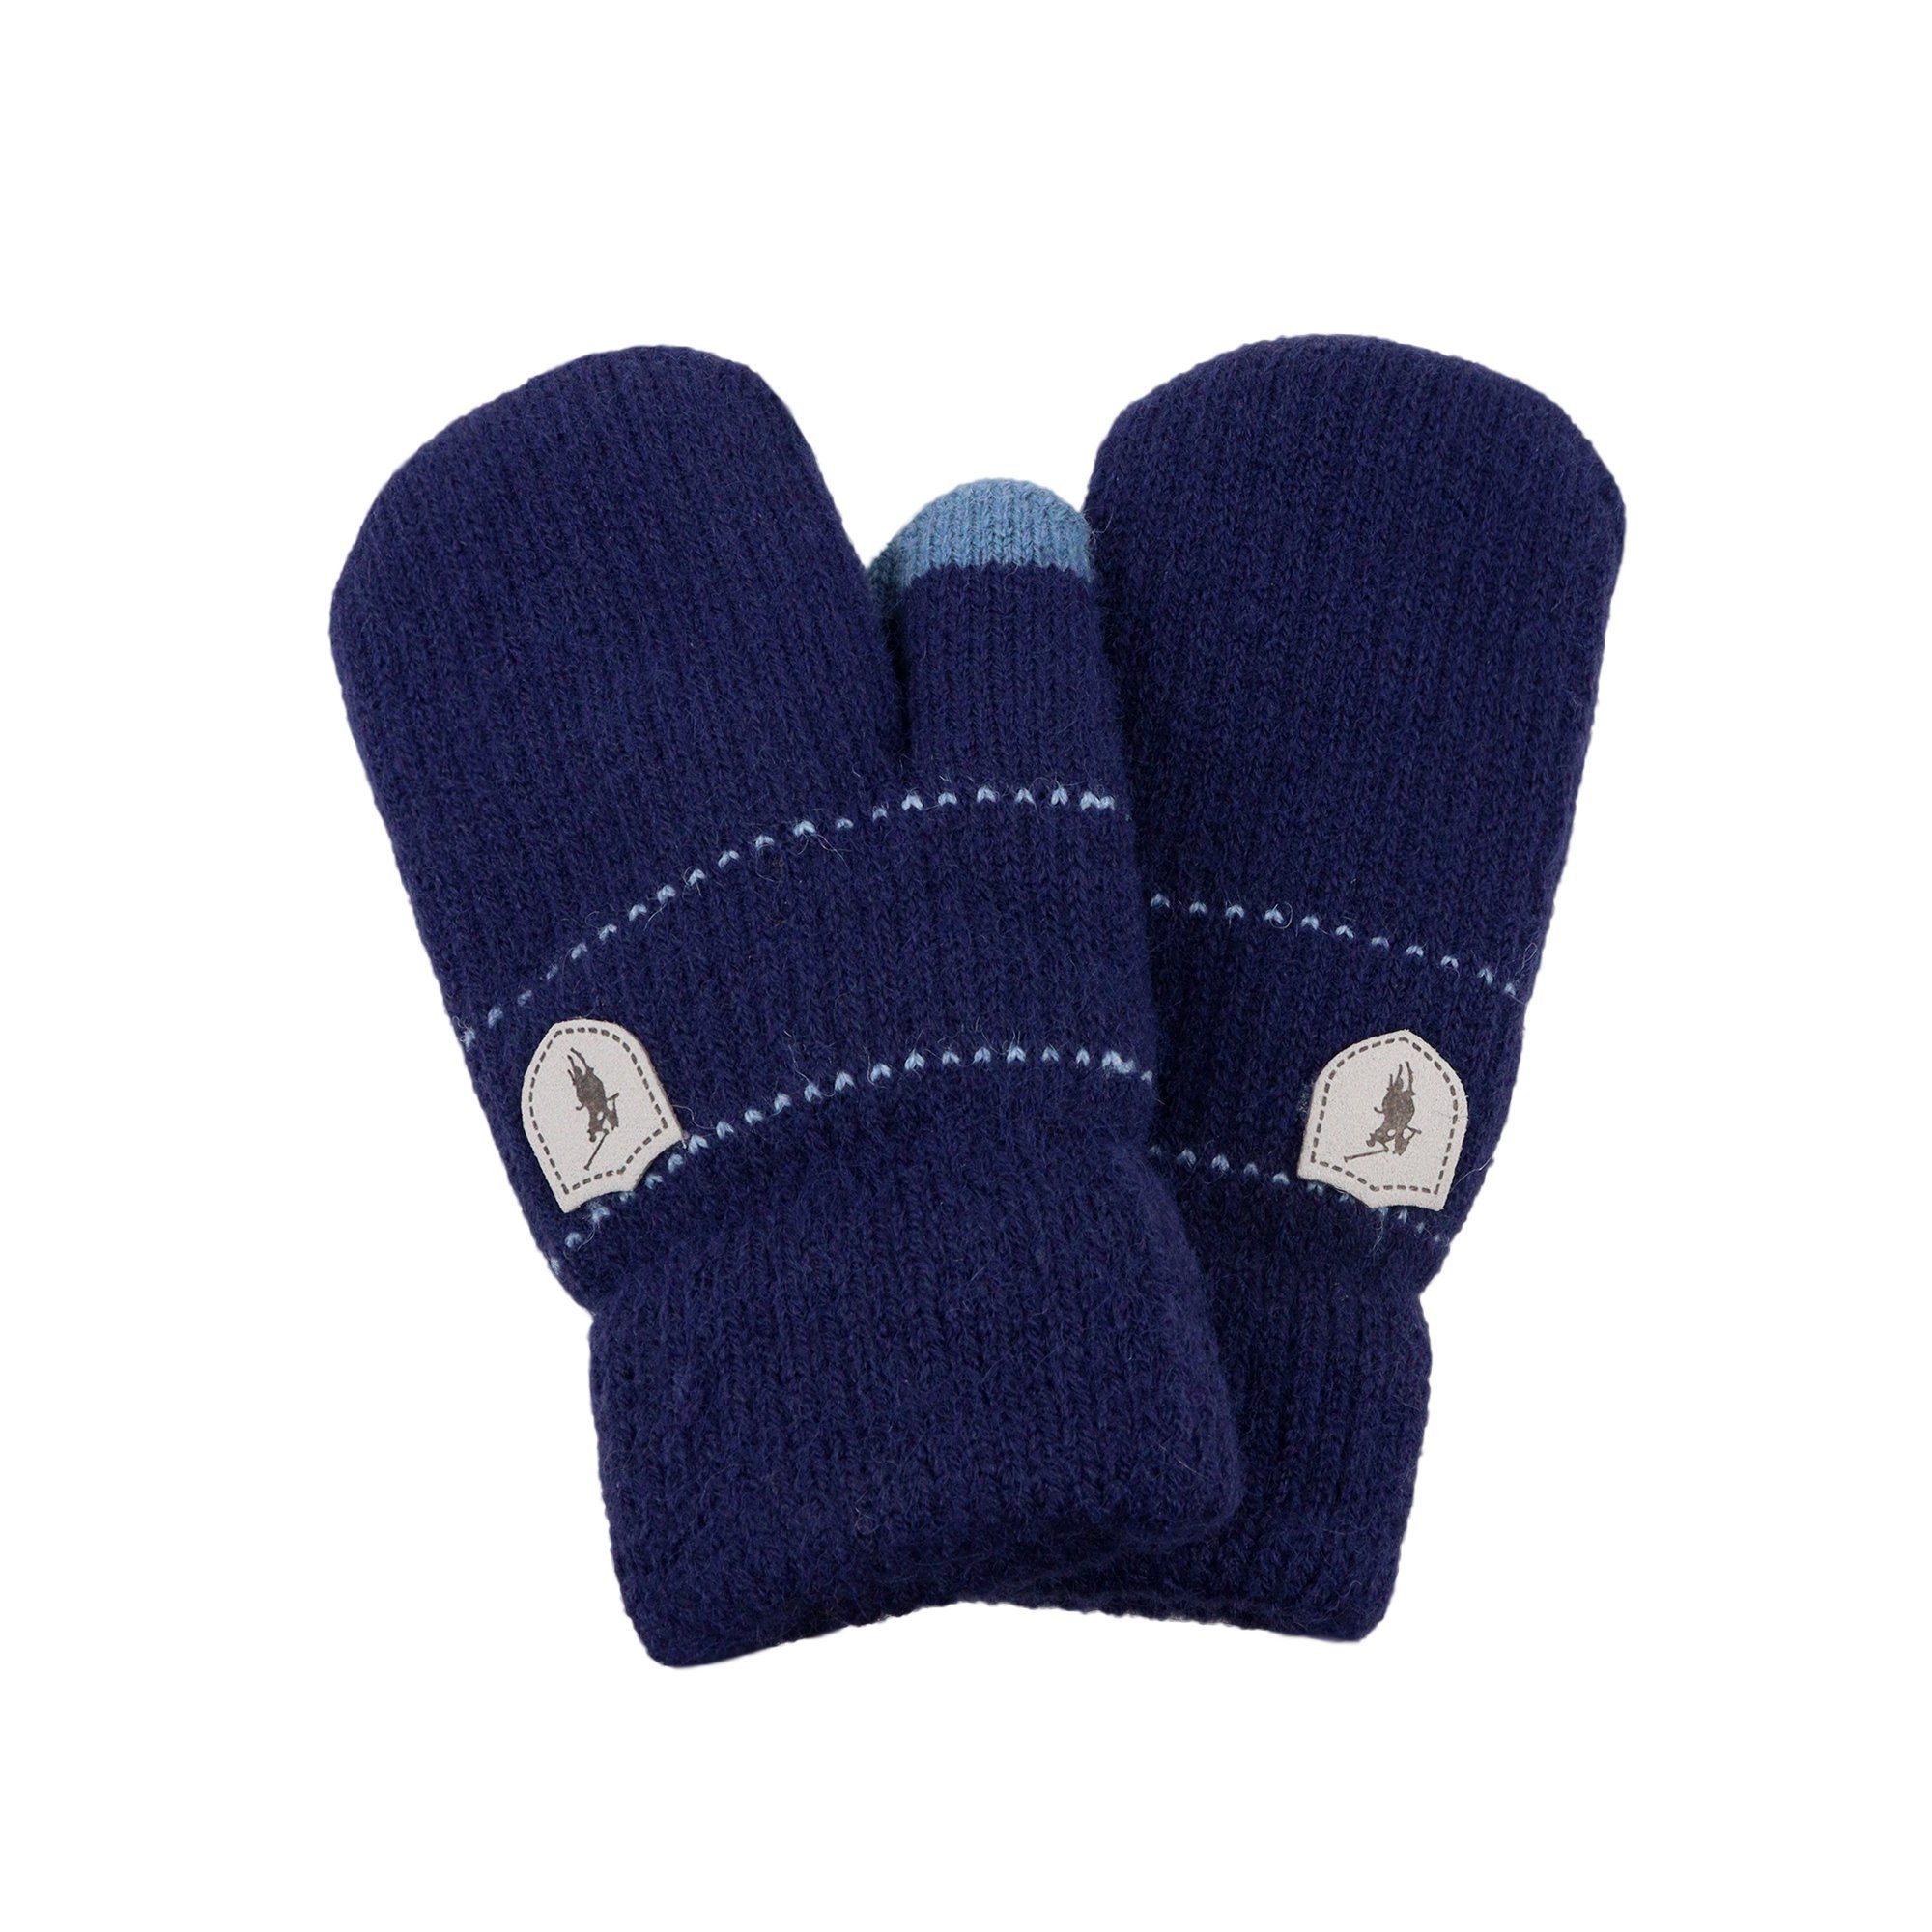 ZEBRO Strickhandschuhe Handschuh königsblau